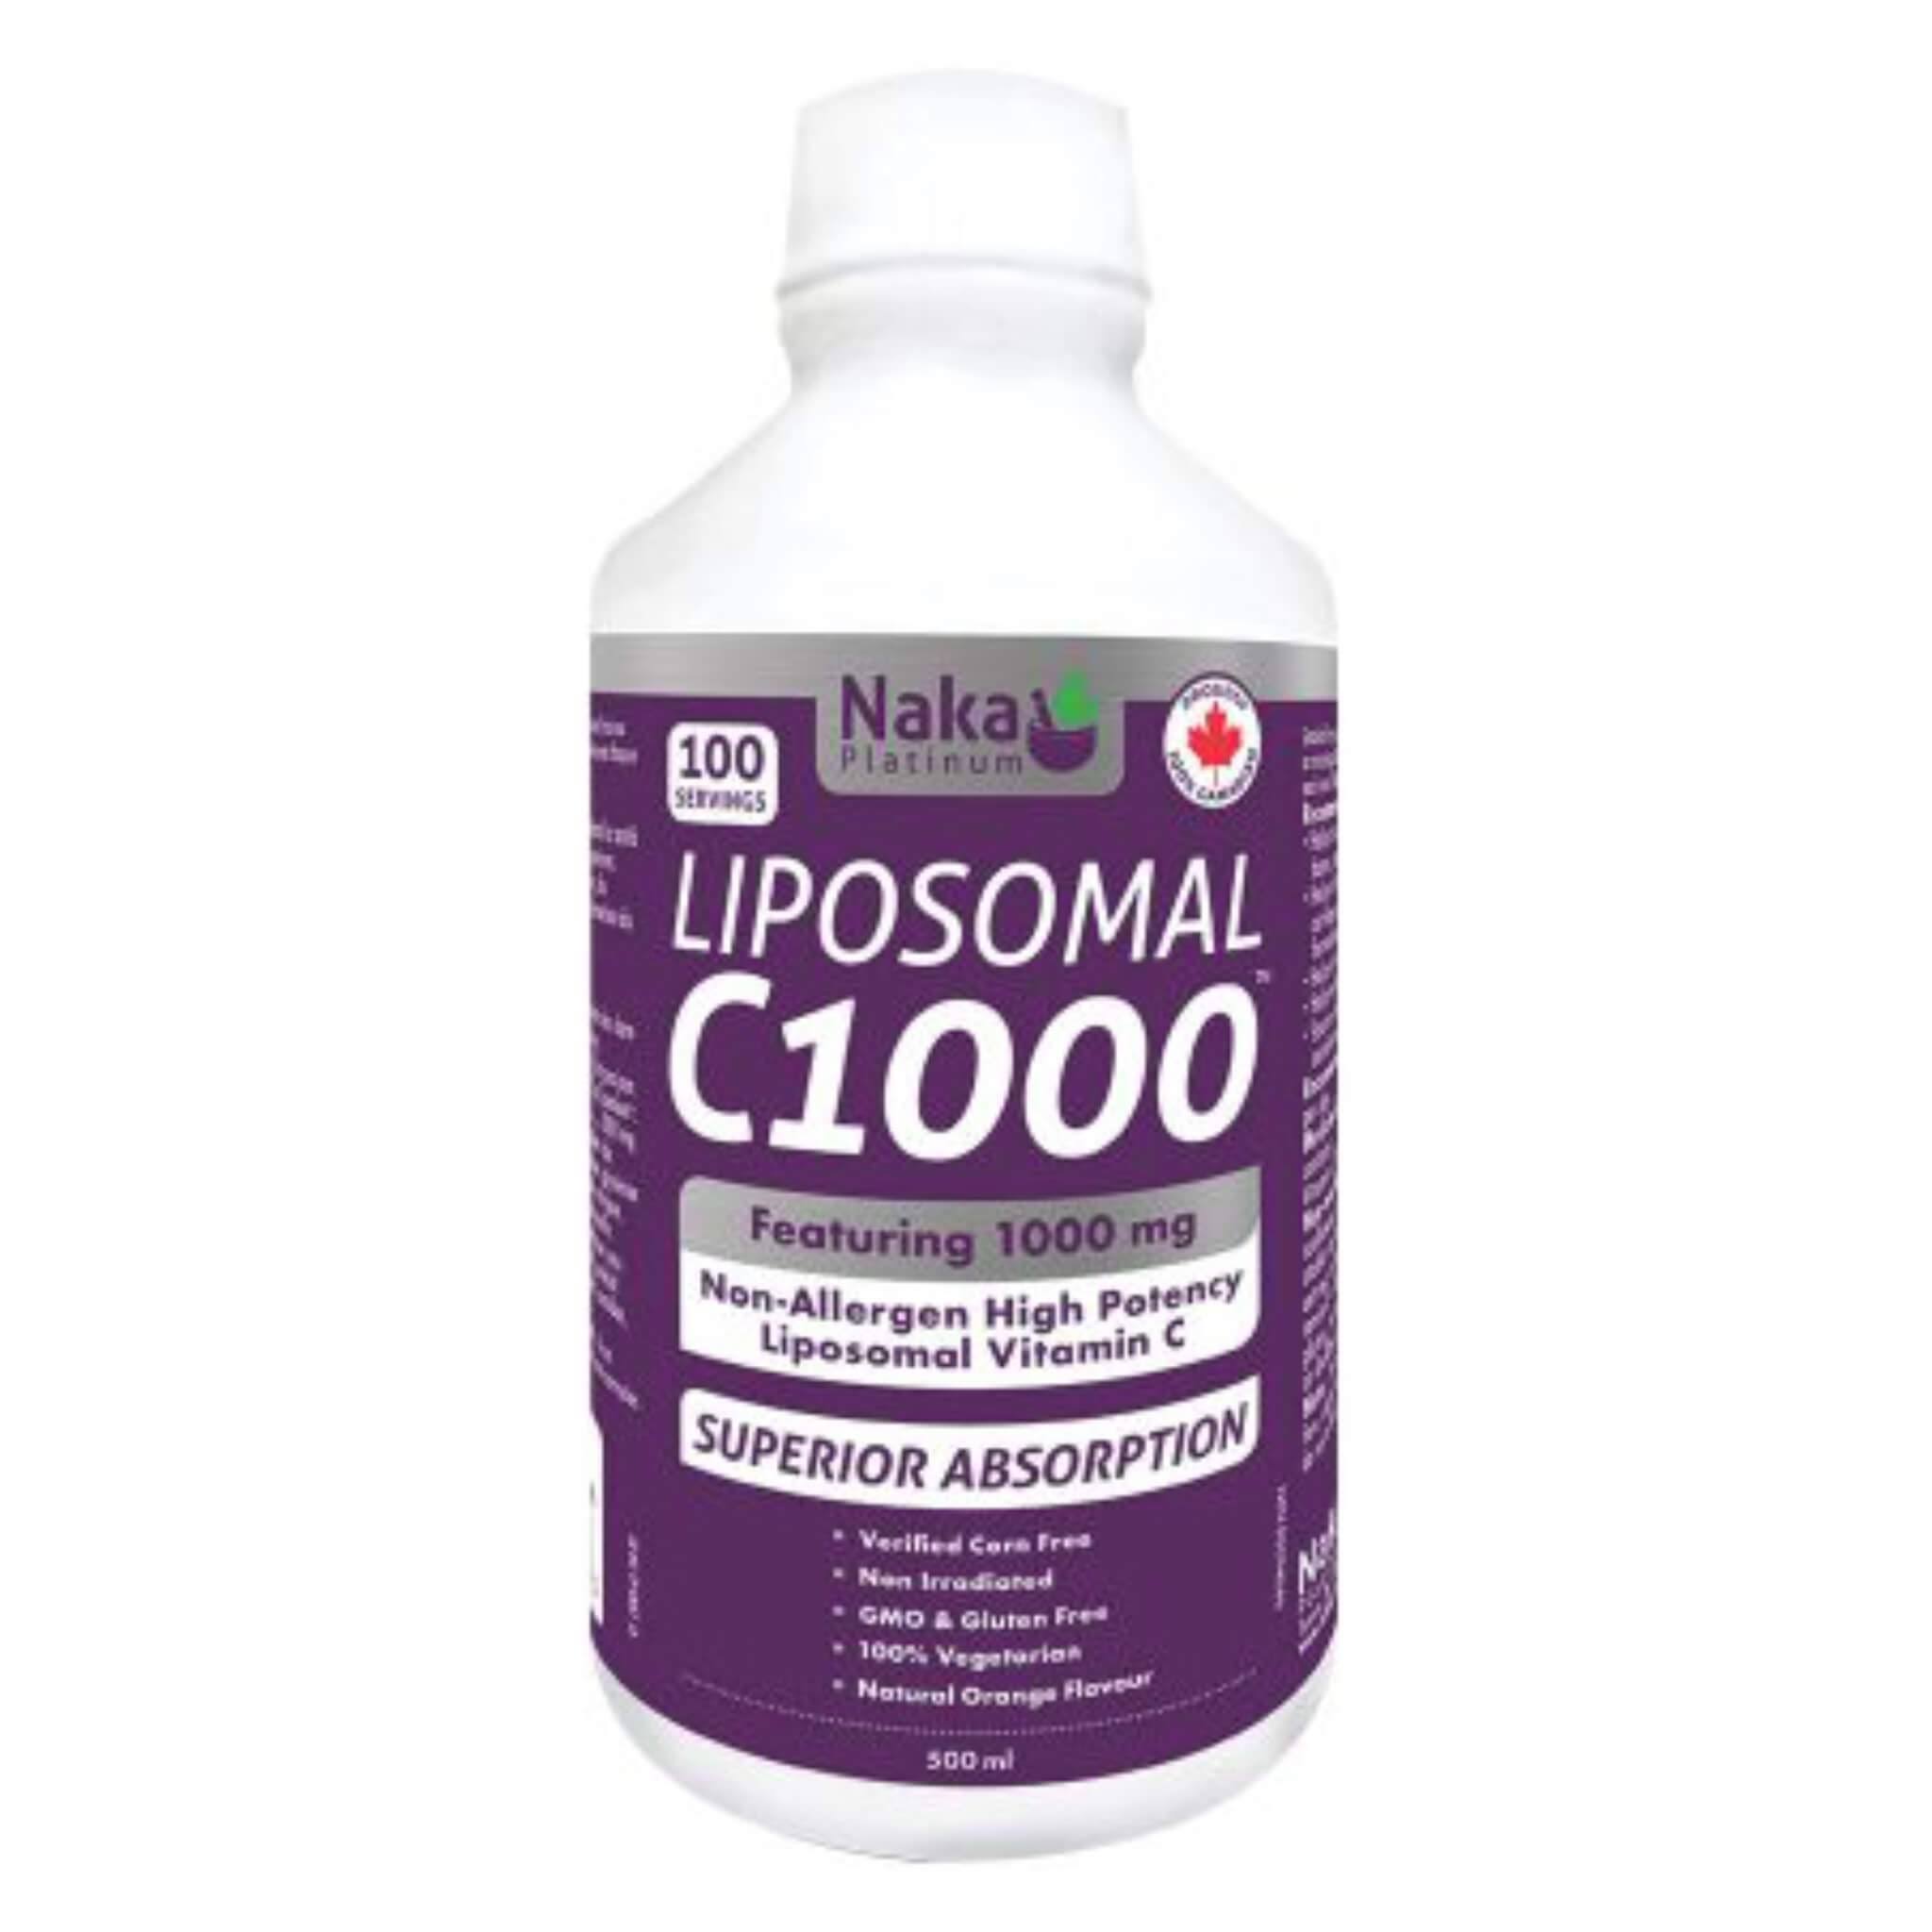 Naka Platinum Liposomal C1000 600 ml Bonus Size